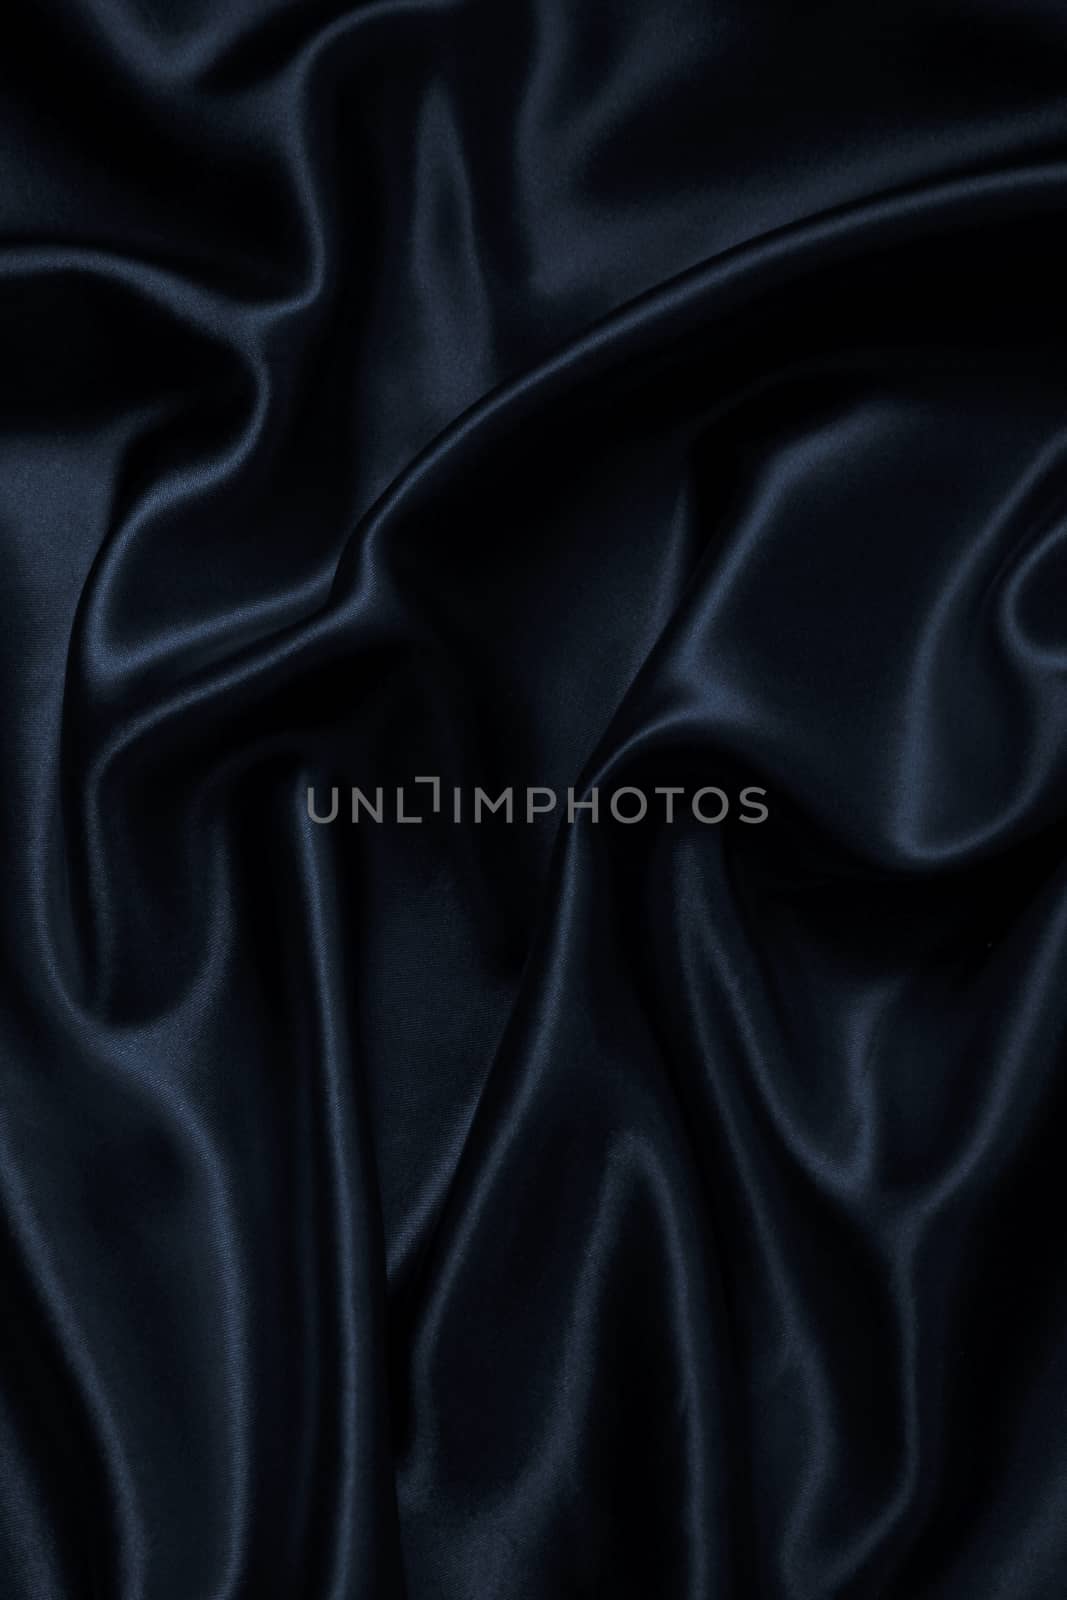 Smooth elegant black silk as background  by oxanatravel